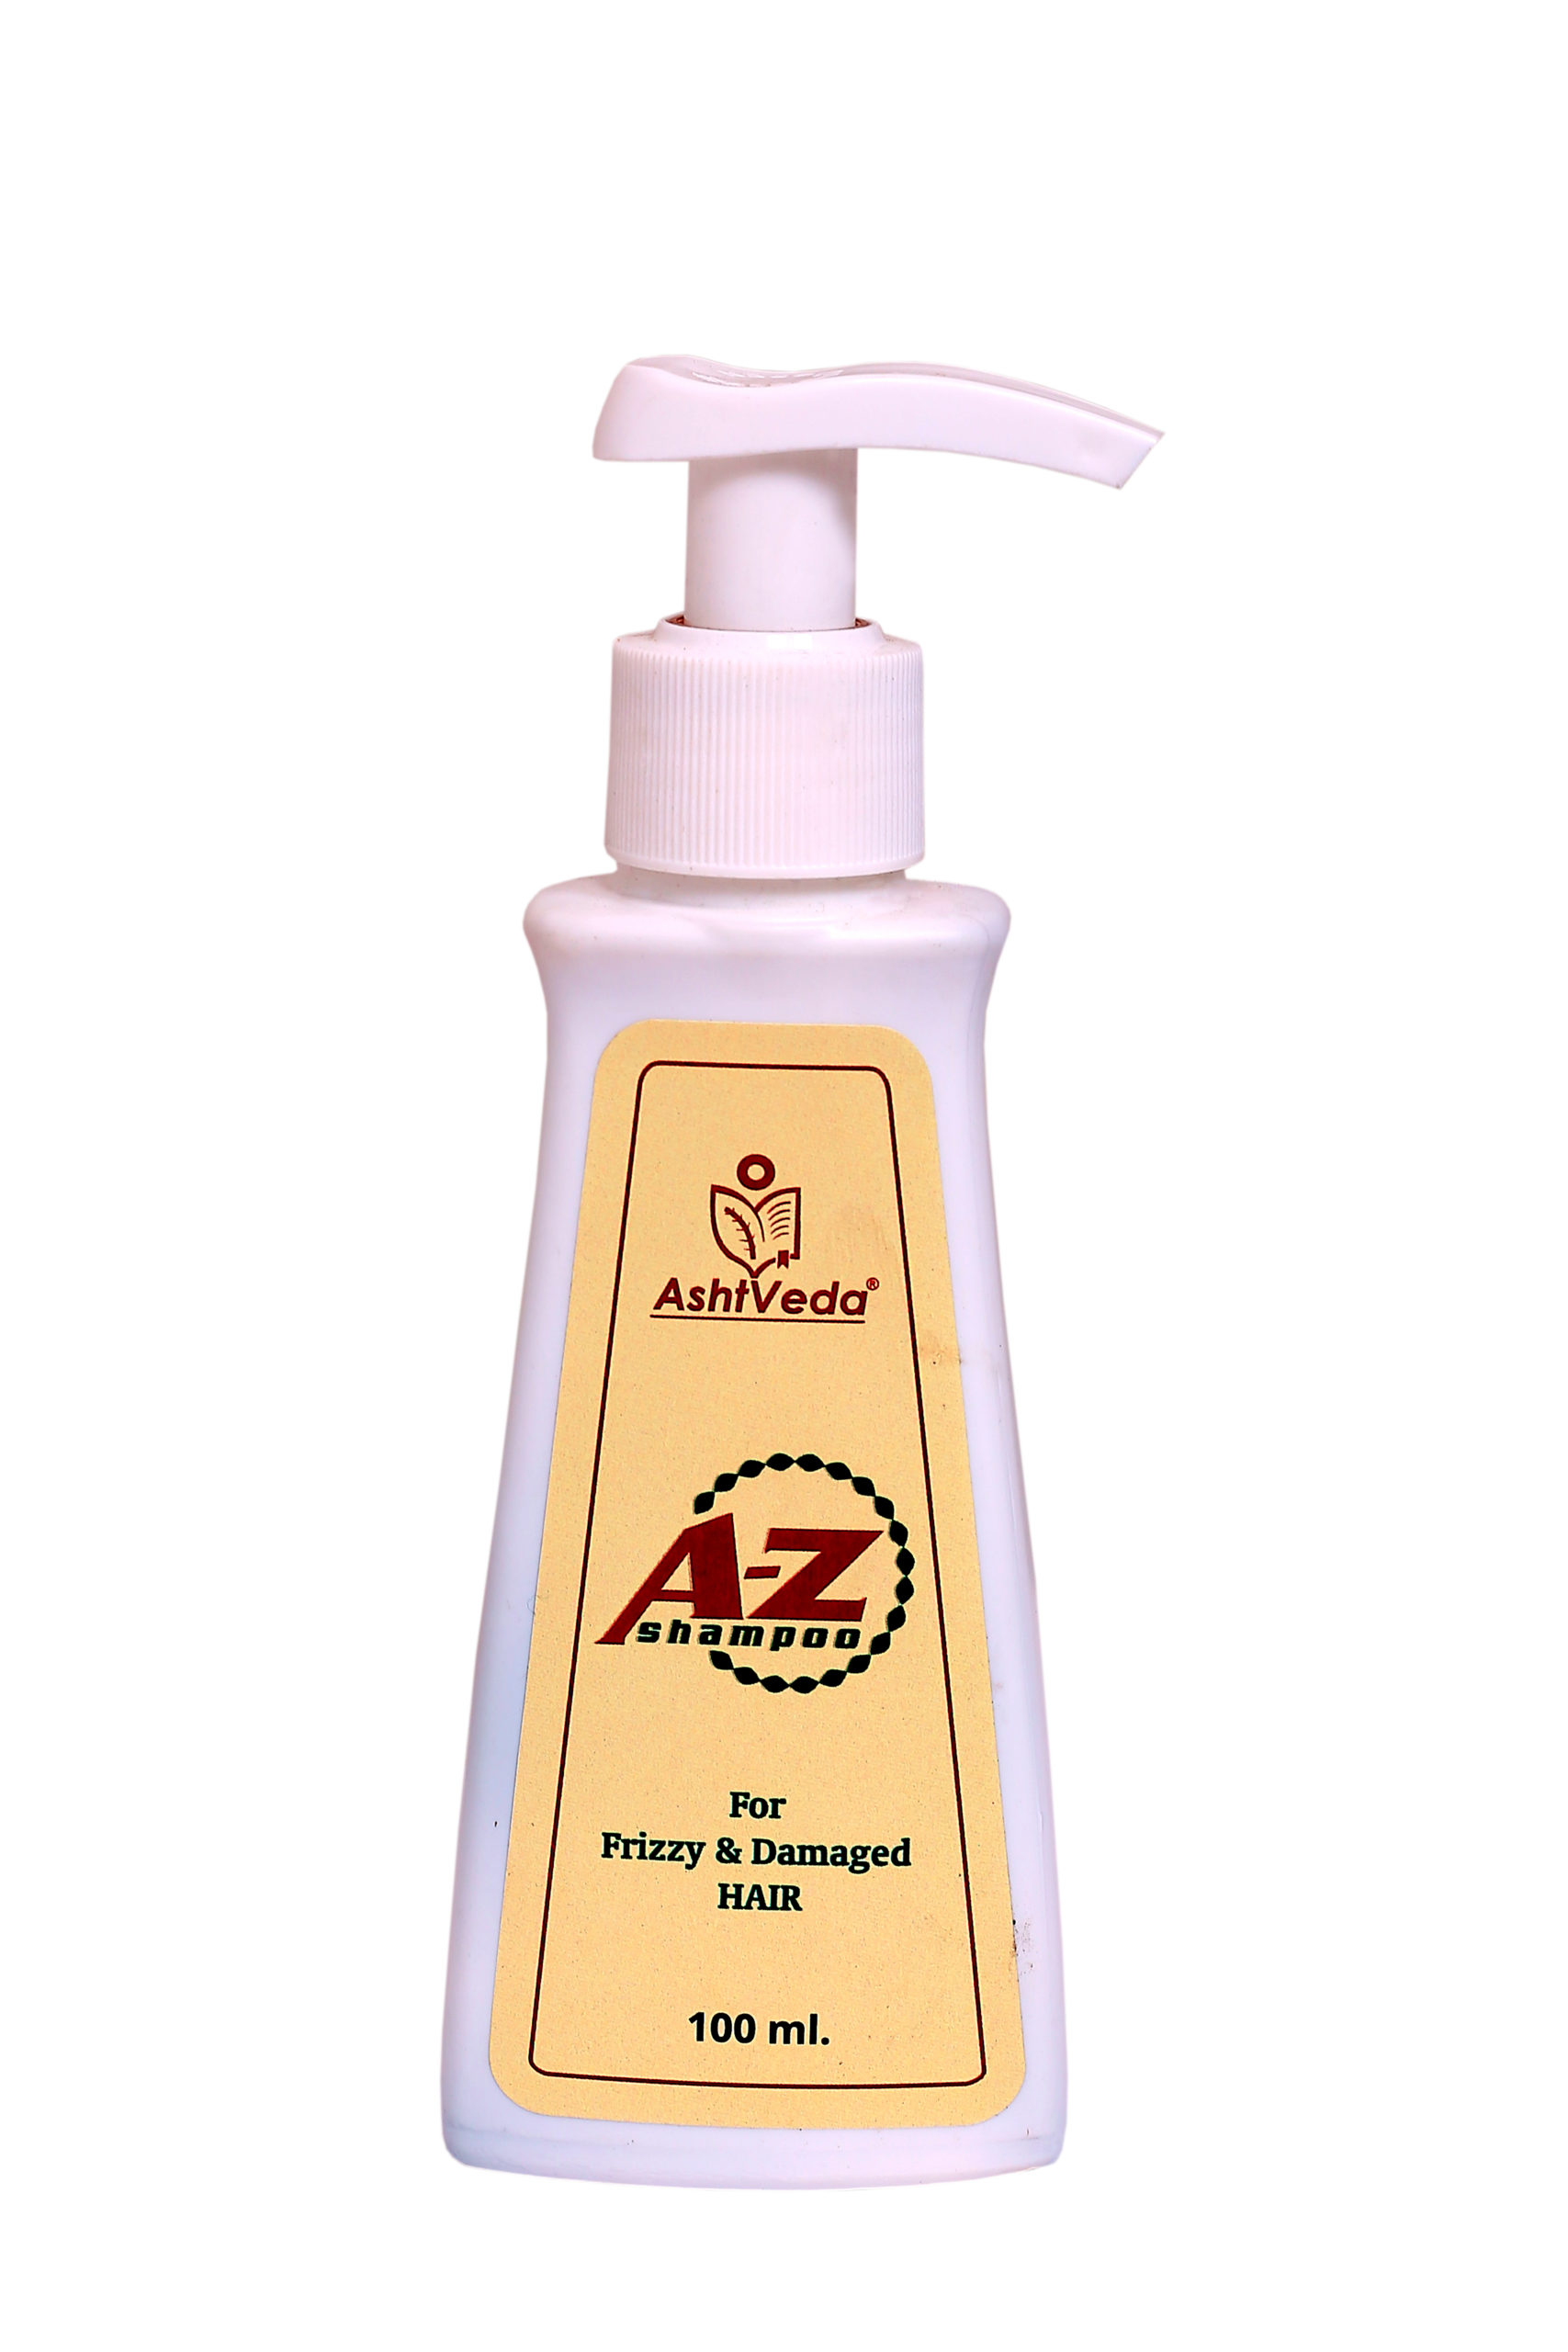 A-Z Shampoo for Frizzy | Damaged Hair ashtveda